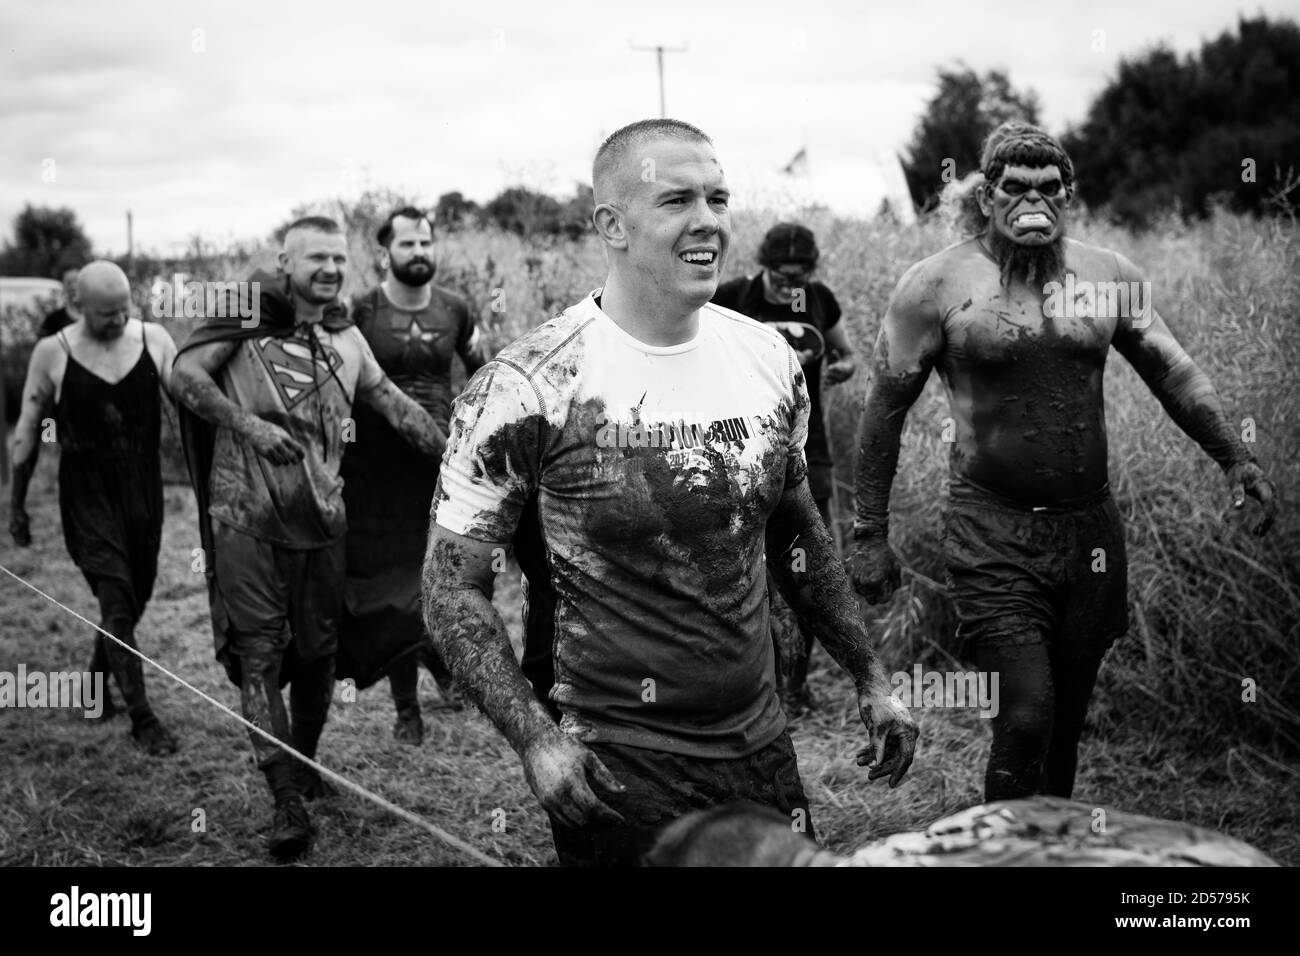 TAMWORTH, UNITED KINGDOM - Oct 22, 2015: Scorpion Run tough mudder outdoor mud run Stock Photo